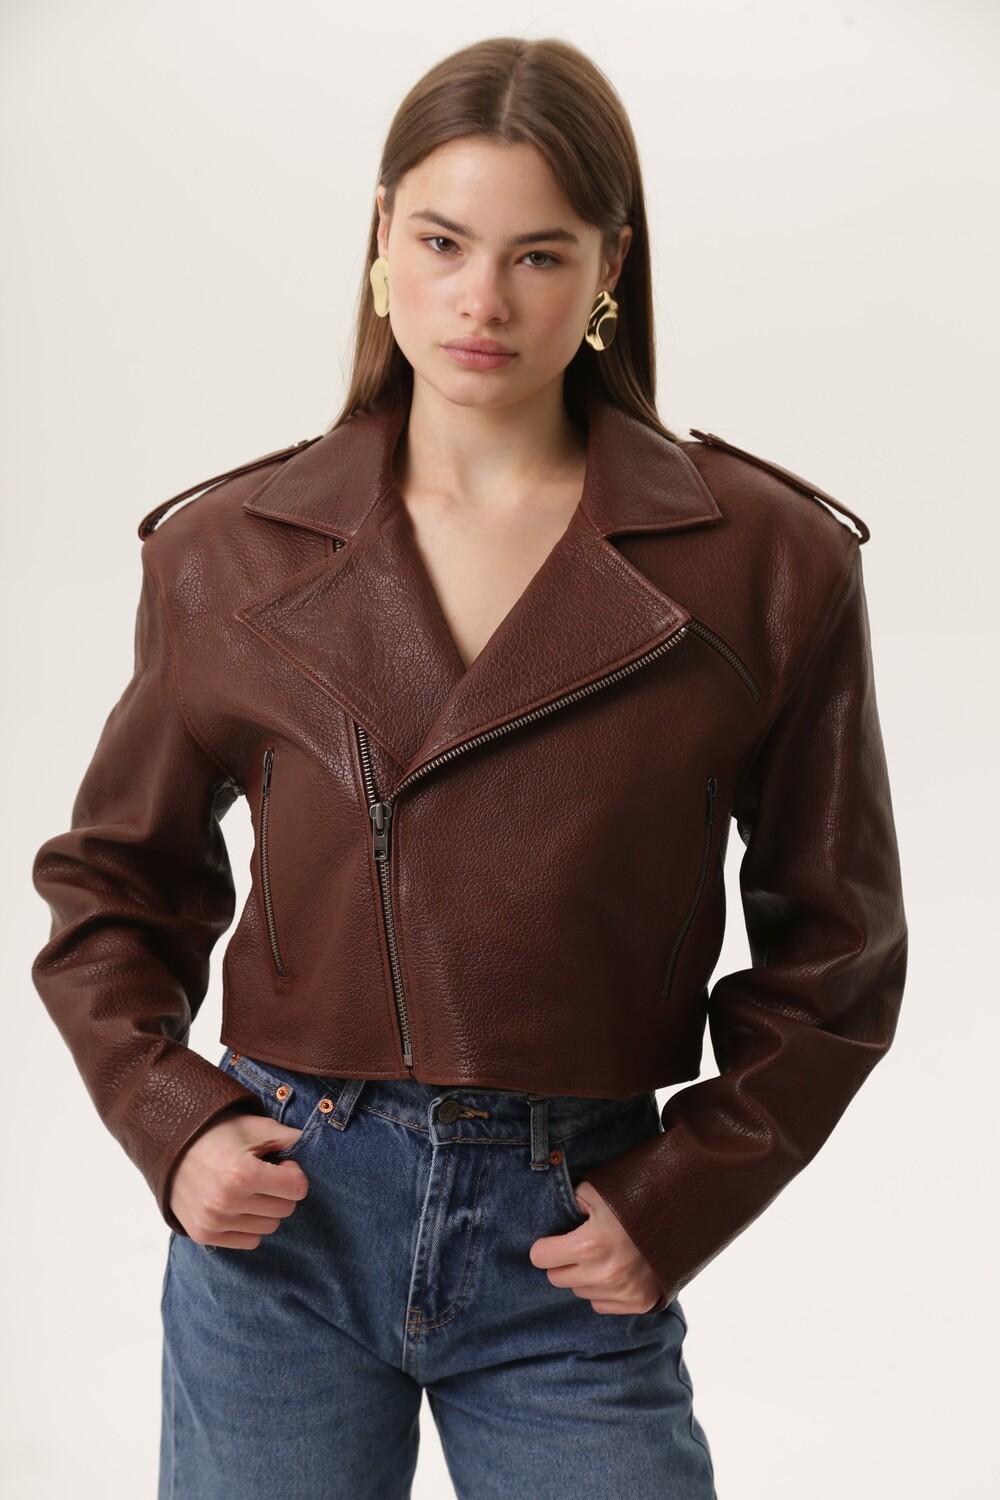 Biker jacket made of genuine leather, brown